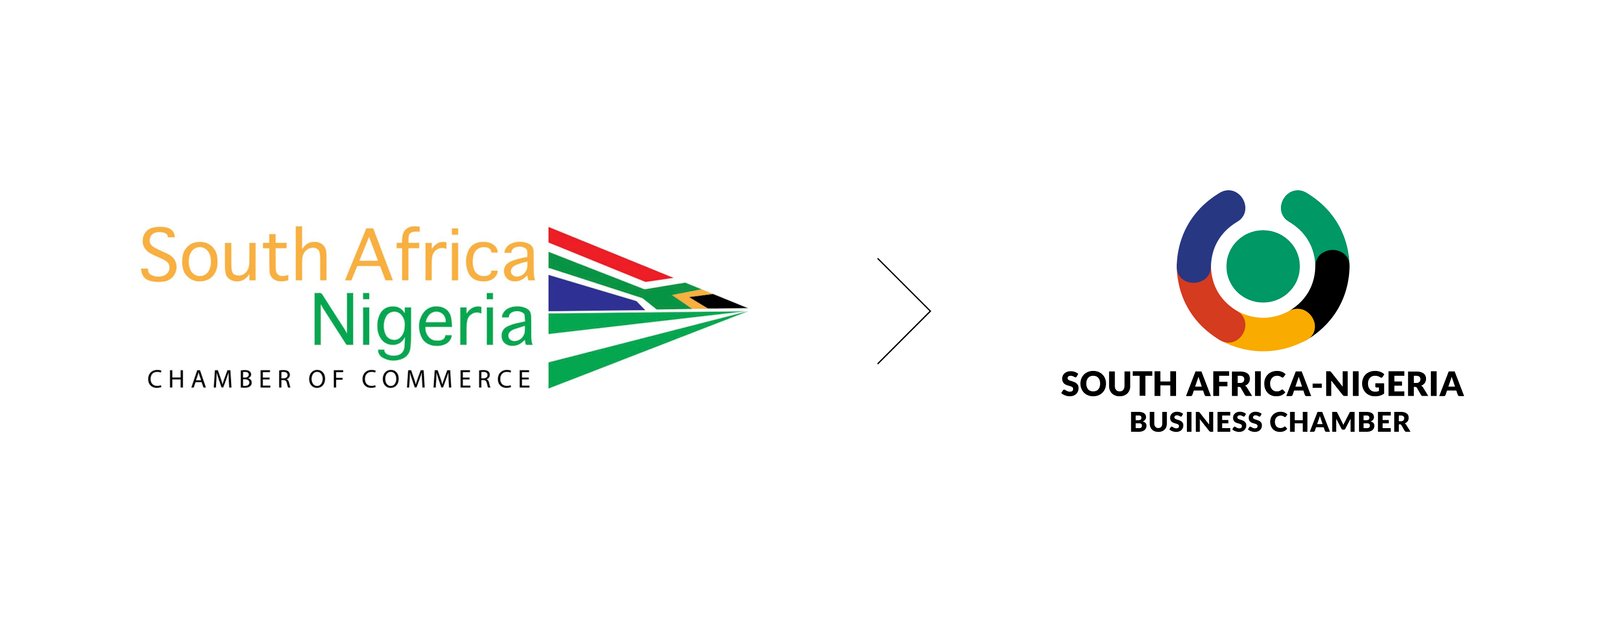 HKLM rebrands the South Africa-Nigeria…